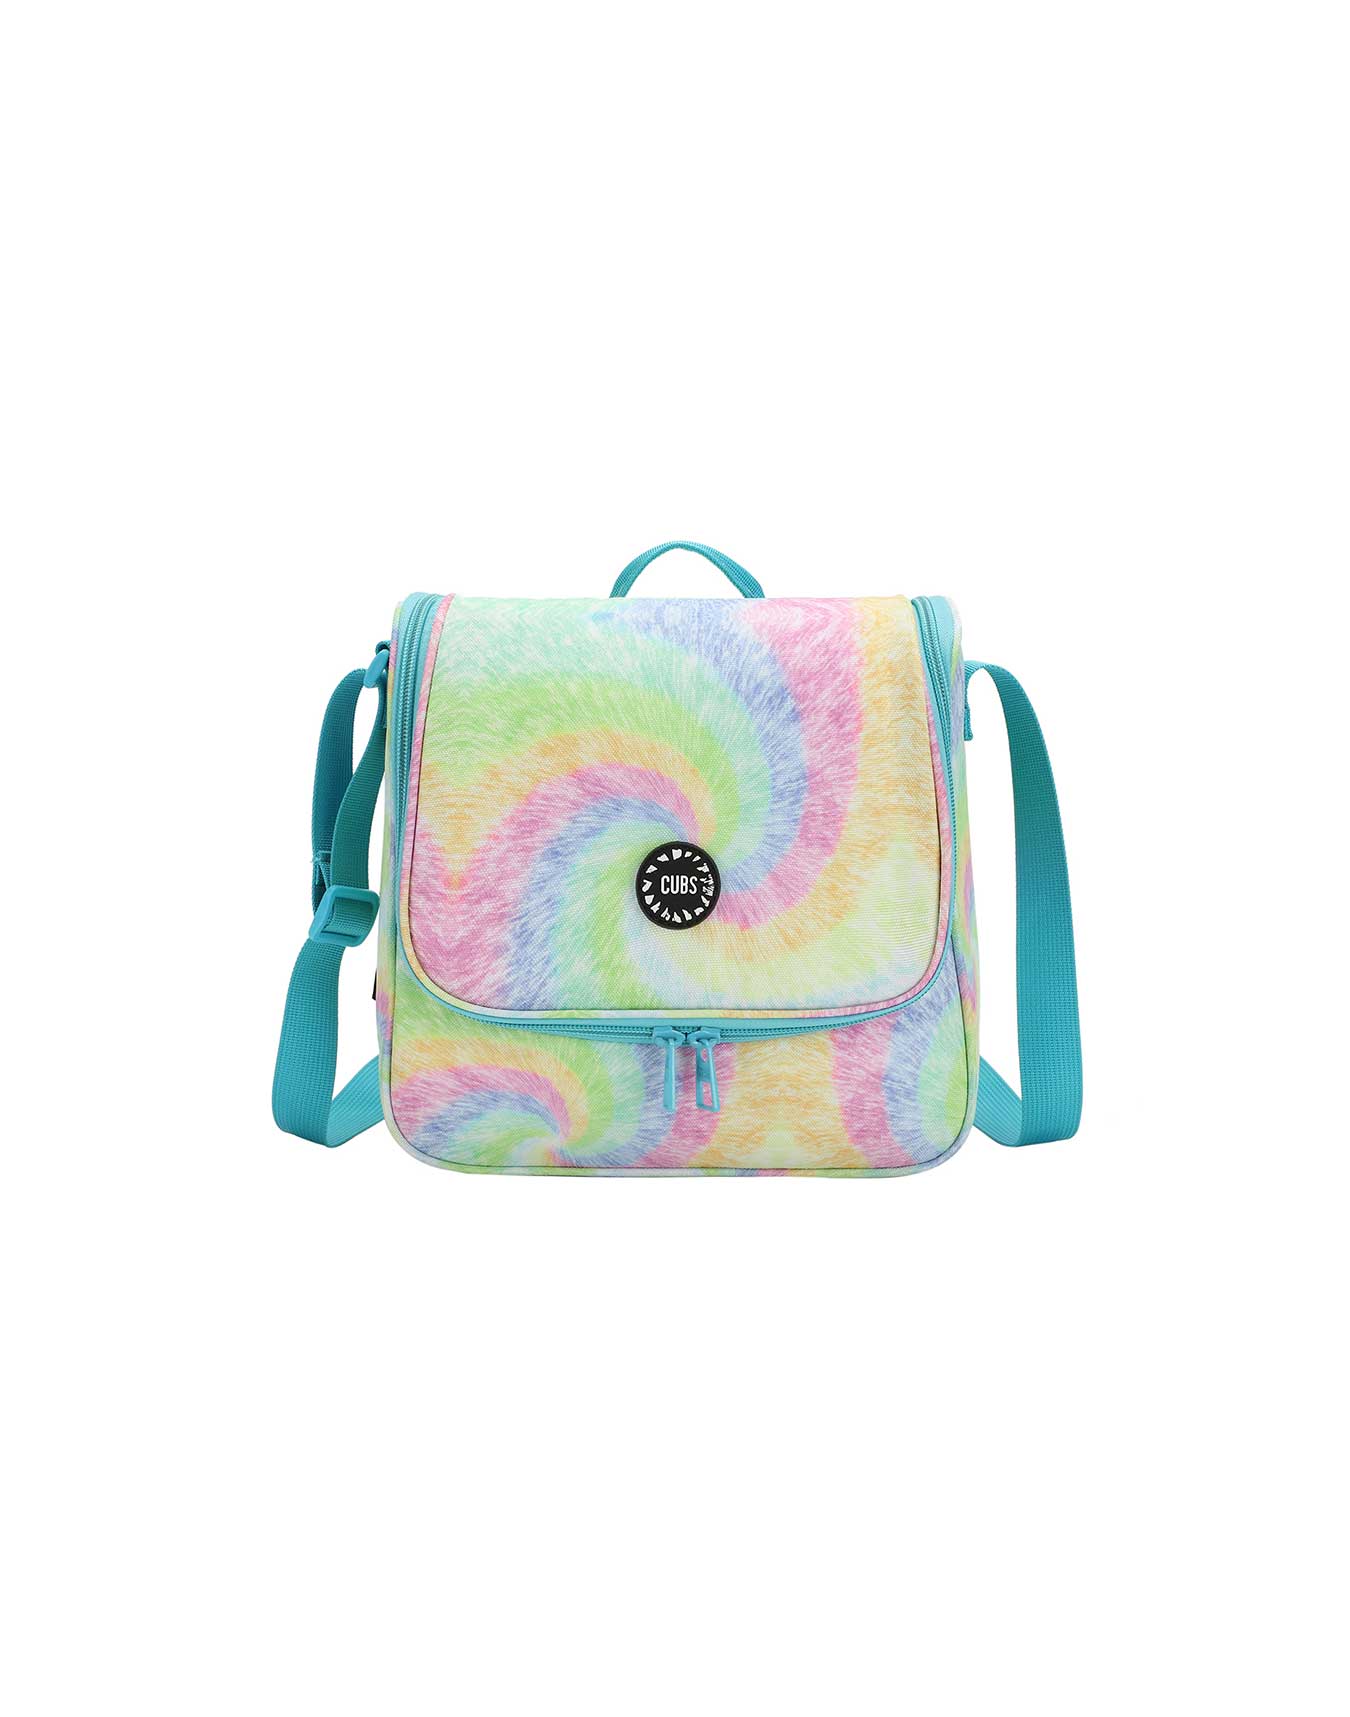 Cross Body Lunch Bag - Pastel Rainbow Swirl